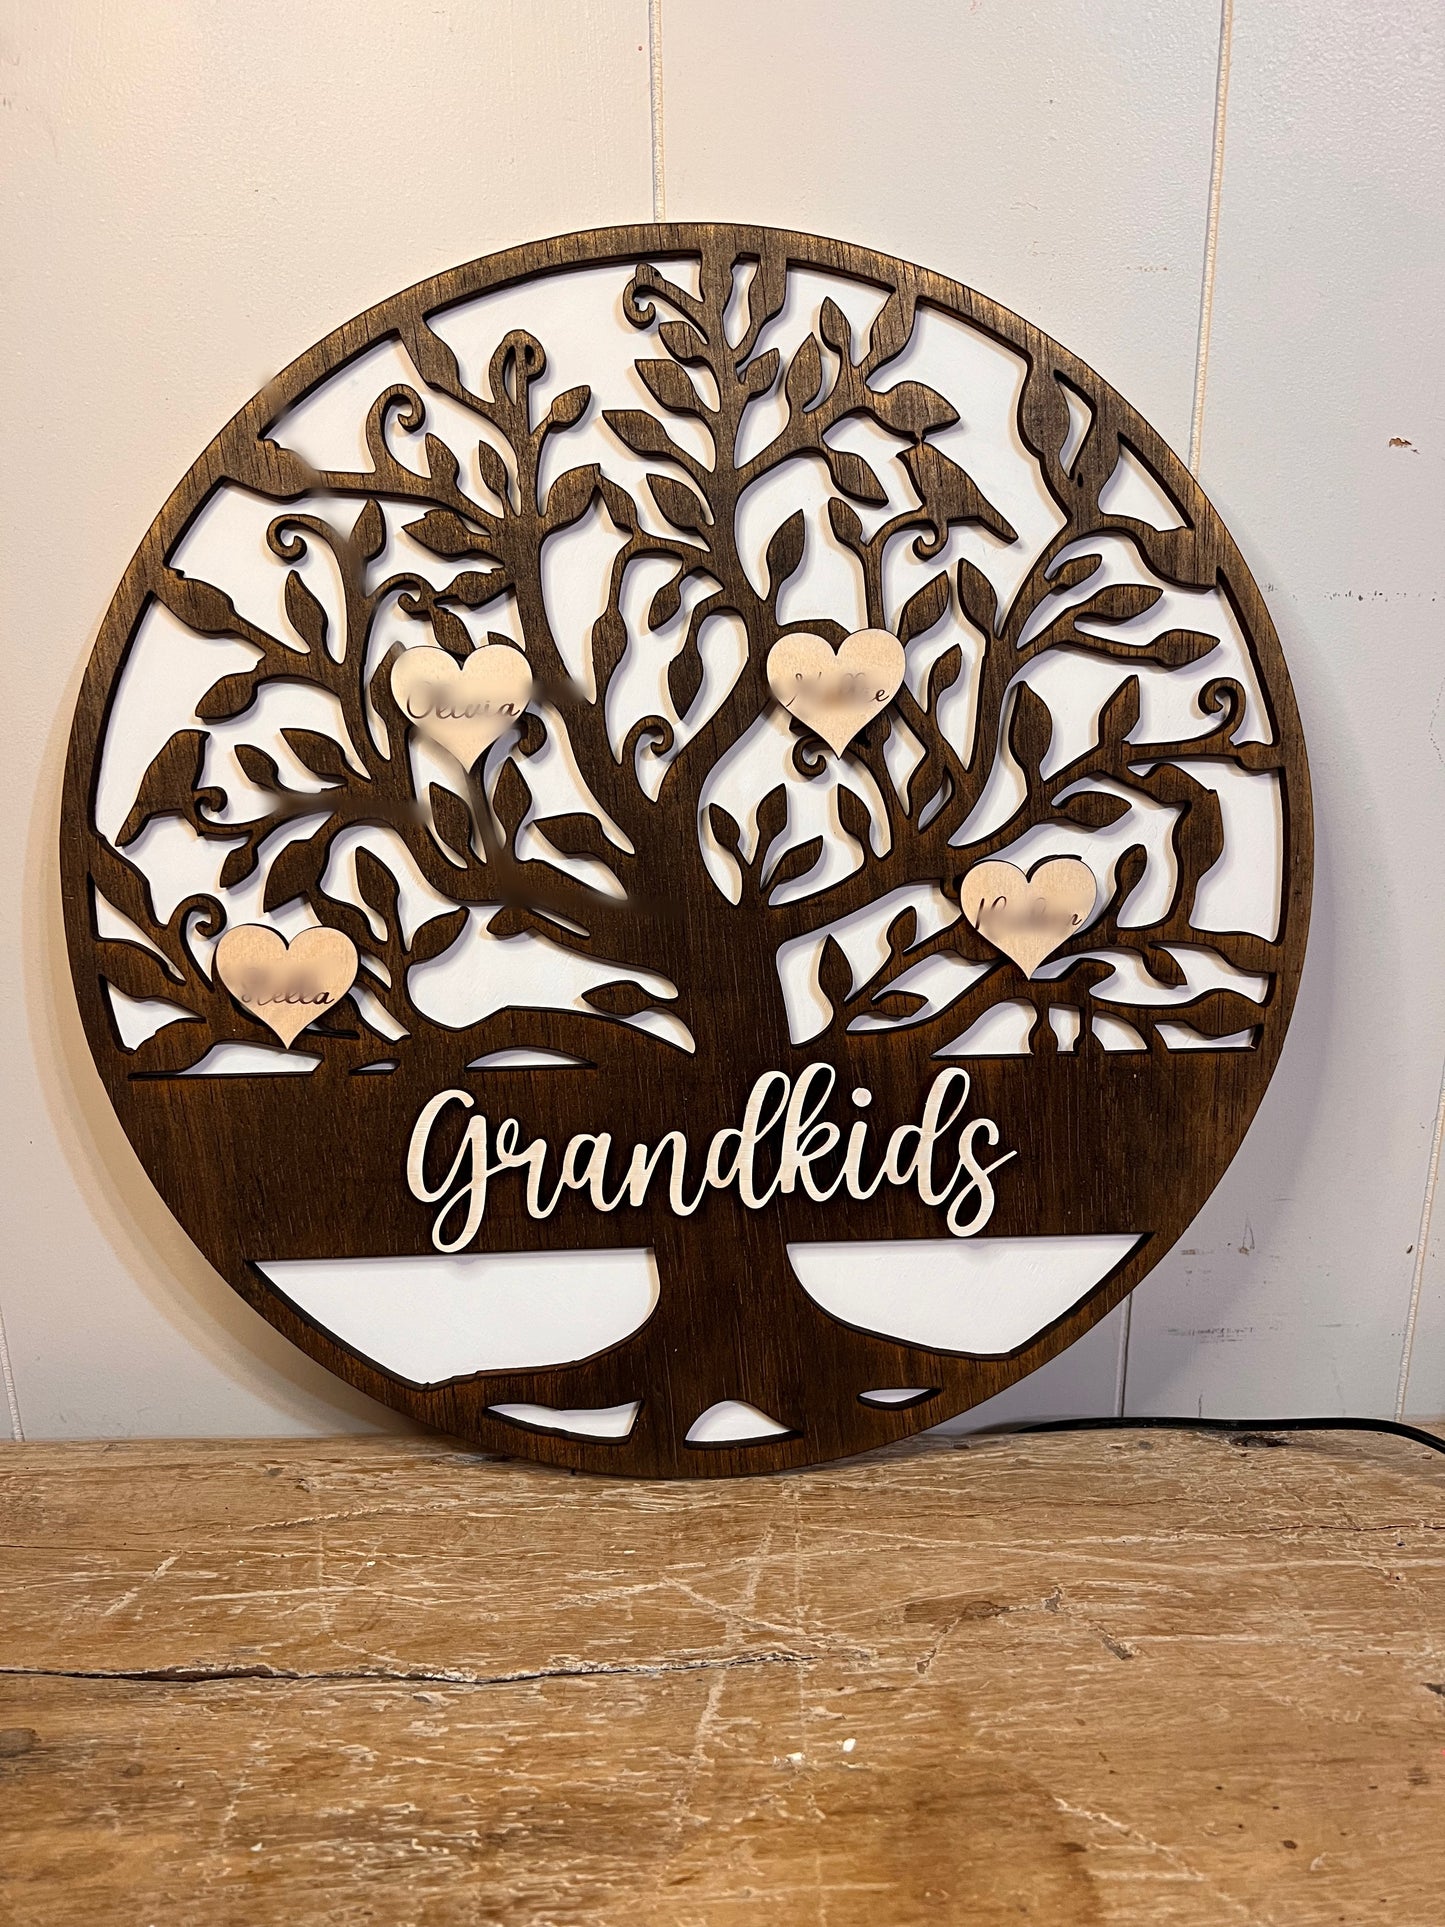 Grandkids family tree